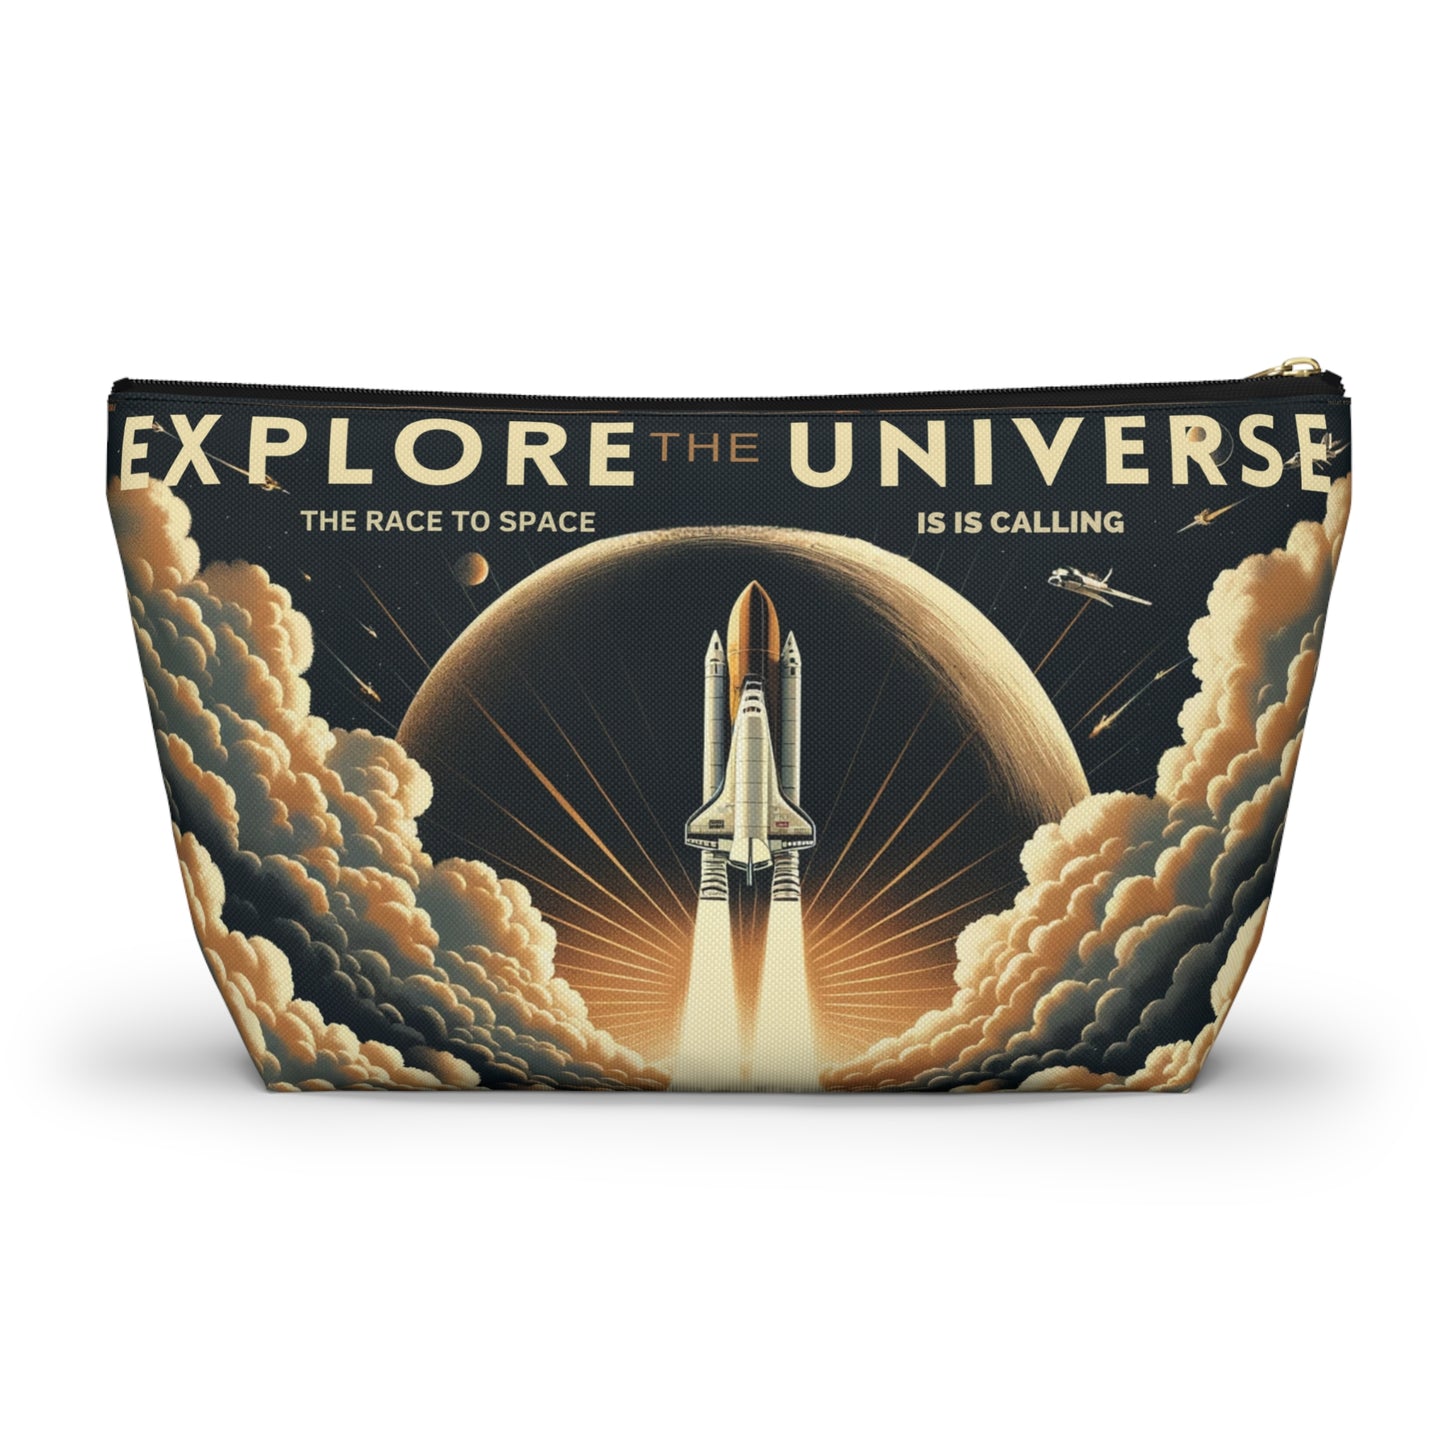 Explore the Universe - Handbag